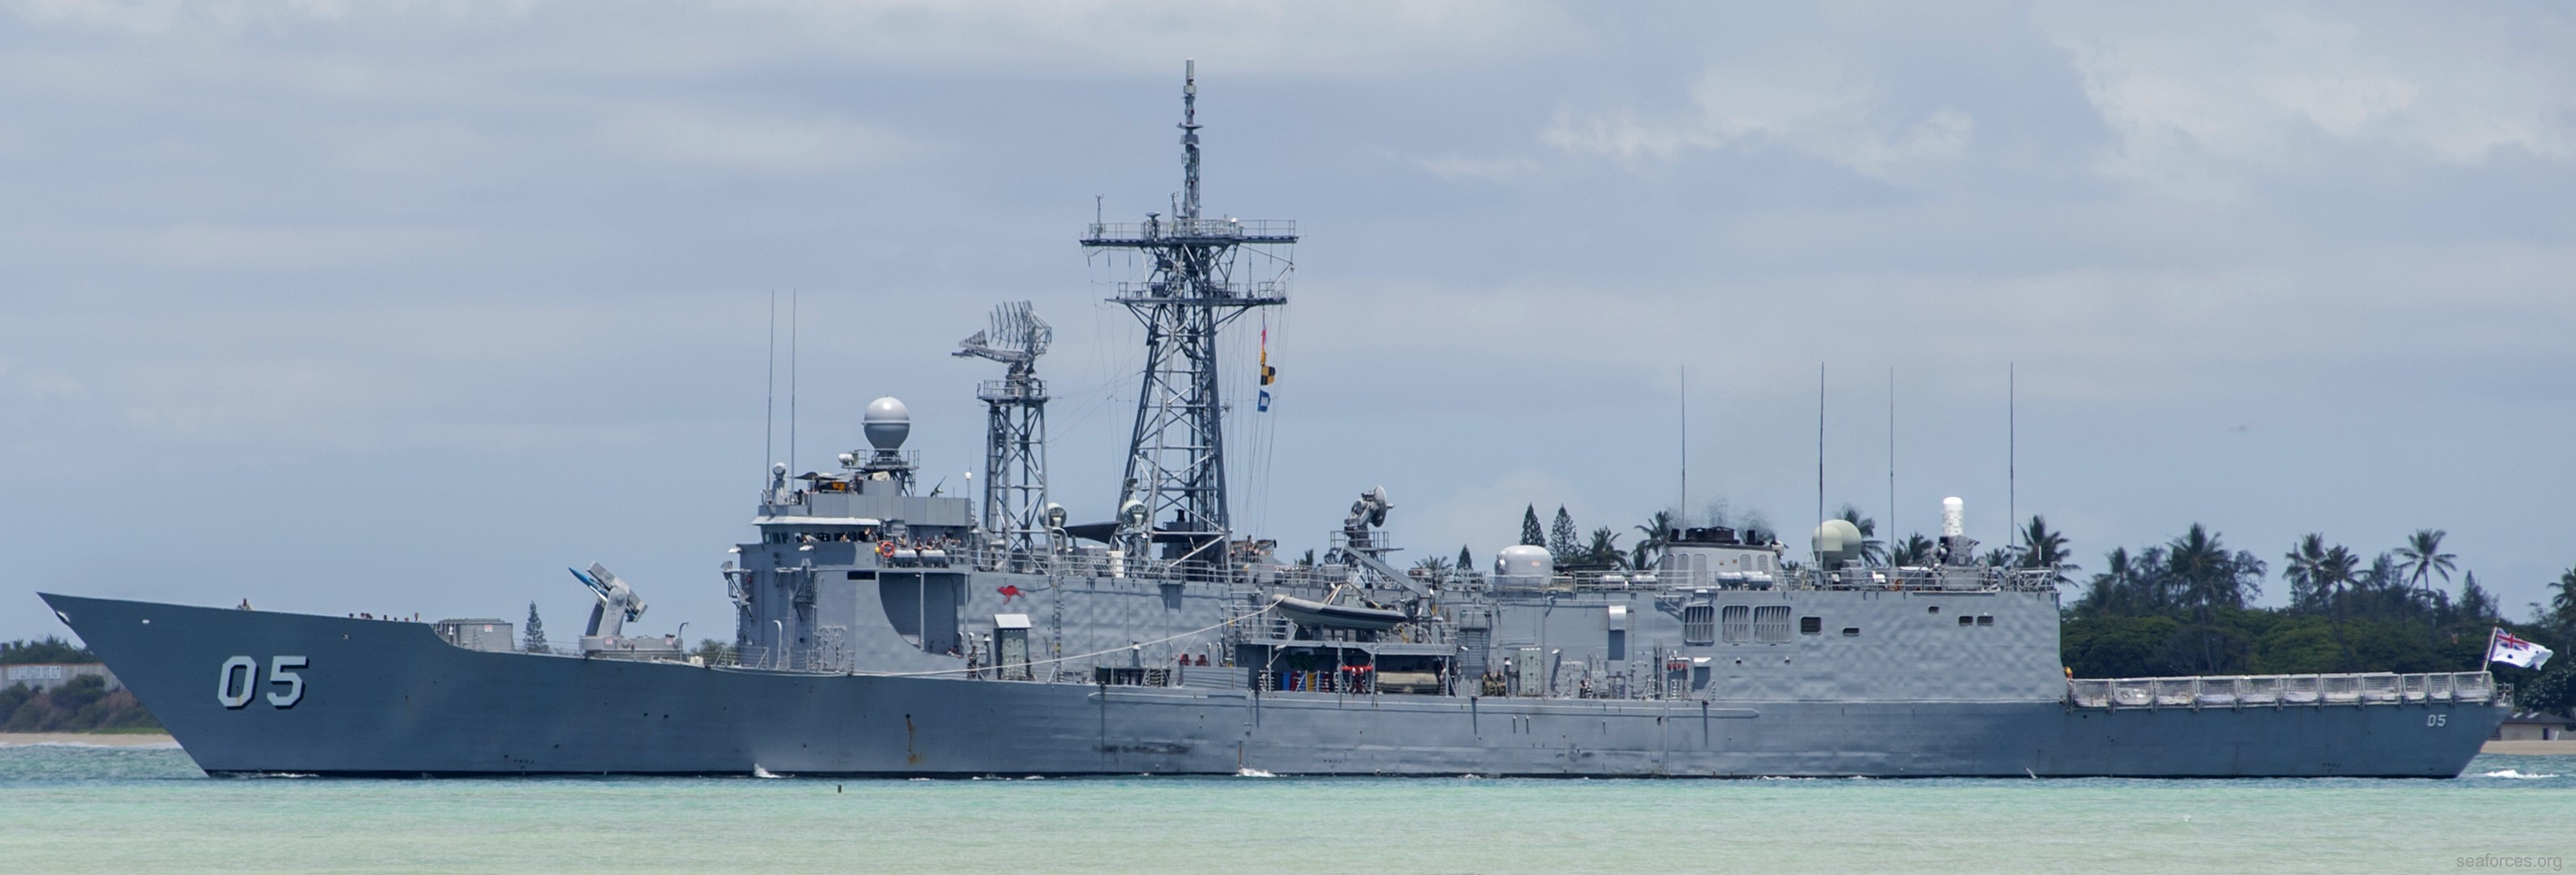 ffg-05 hmas melbourne adelaide class frigate royal australian navy 08 pearl harbor hawaii rimpac